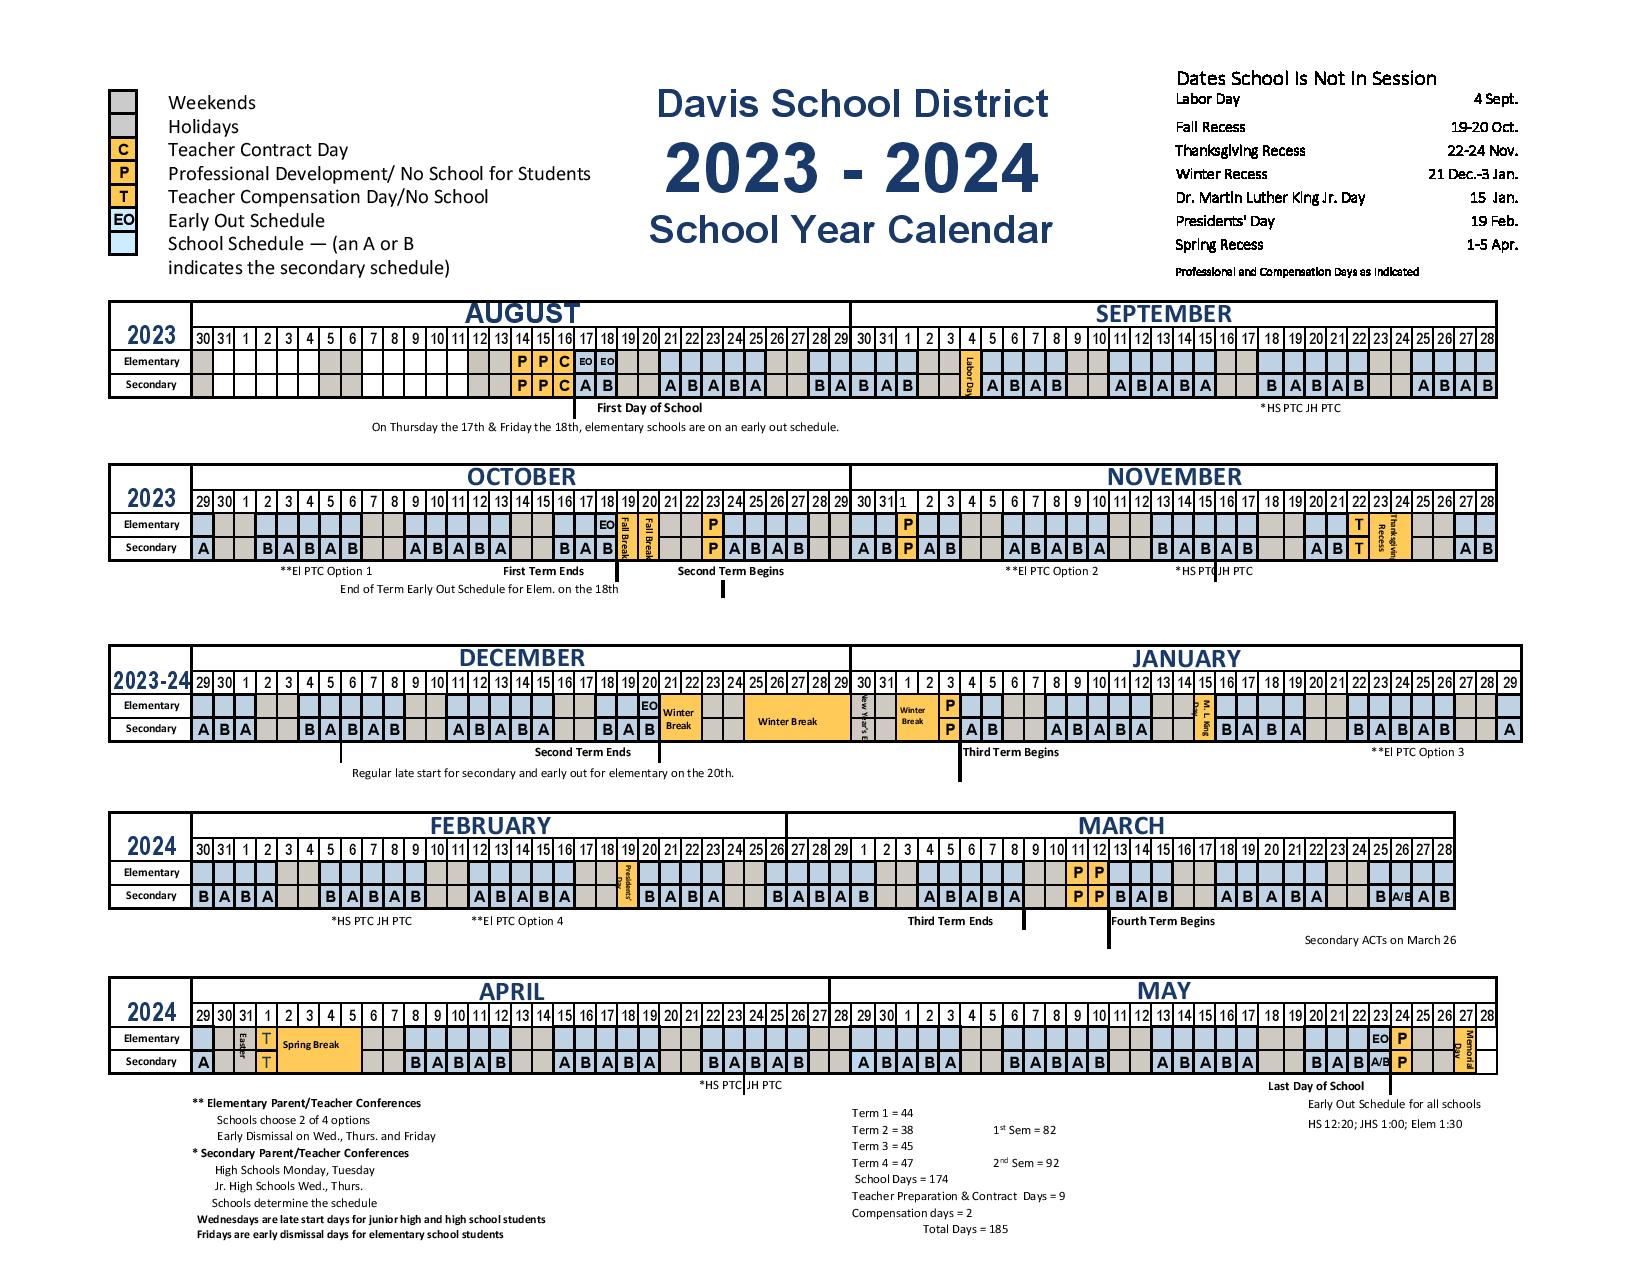 Davis School District Calendar 2023 2024 in PDF